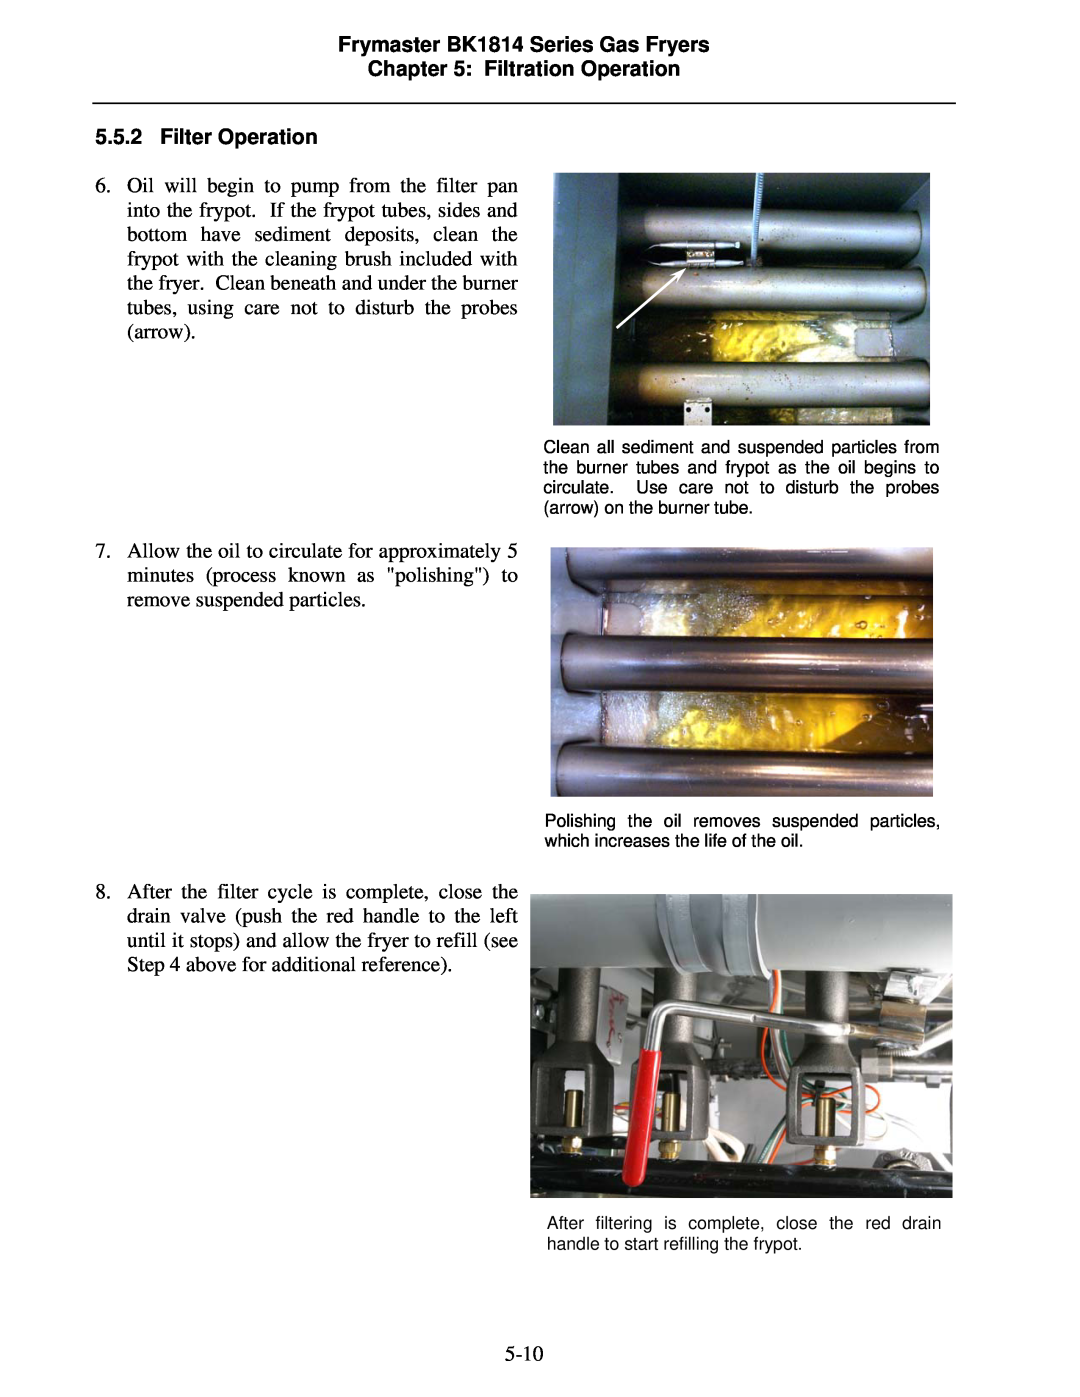 Frymaster BK1814 operation manual 5-10 